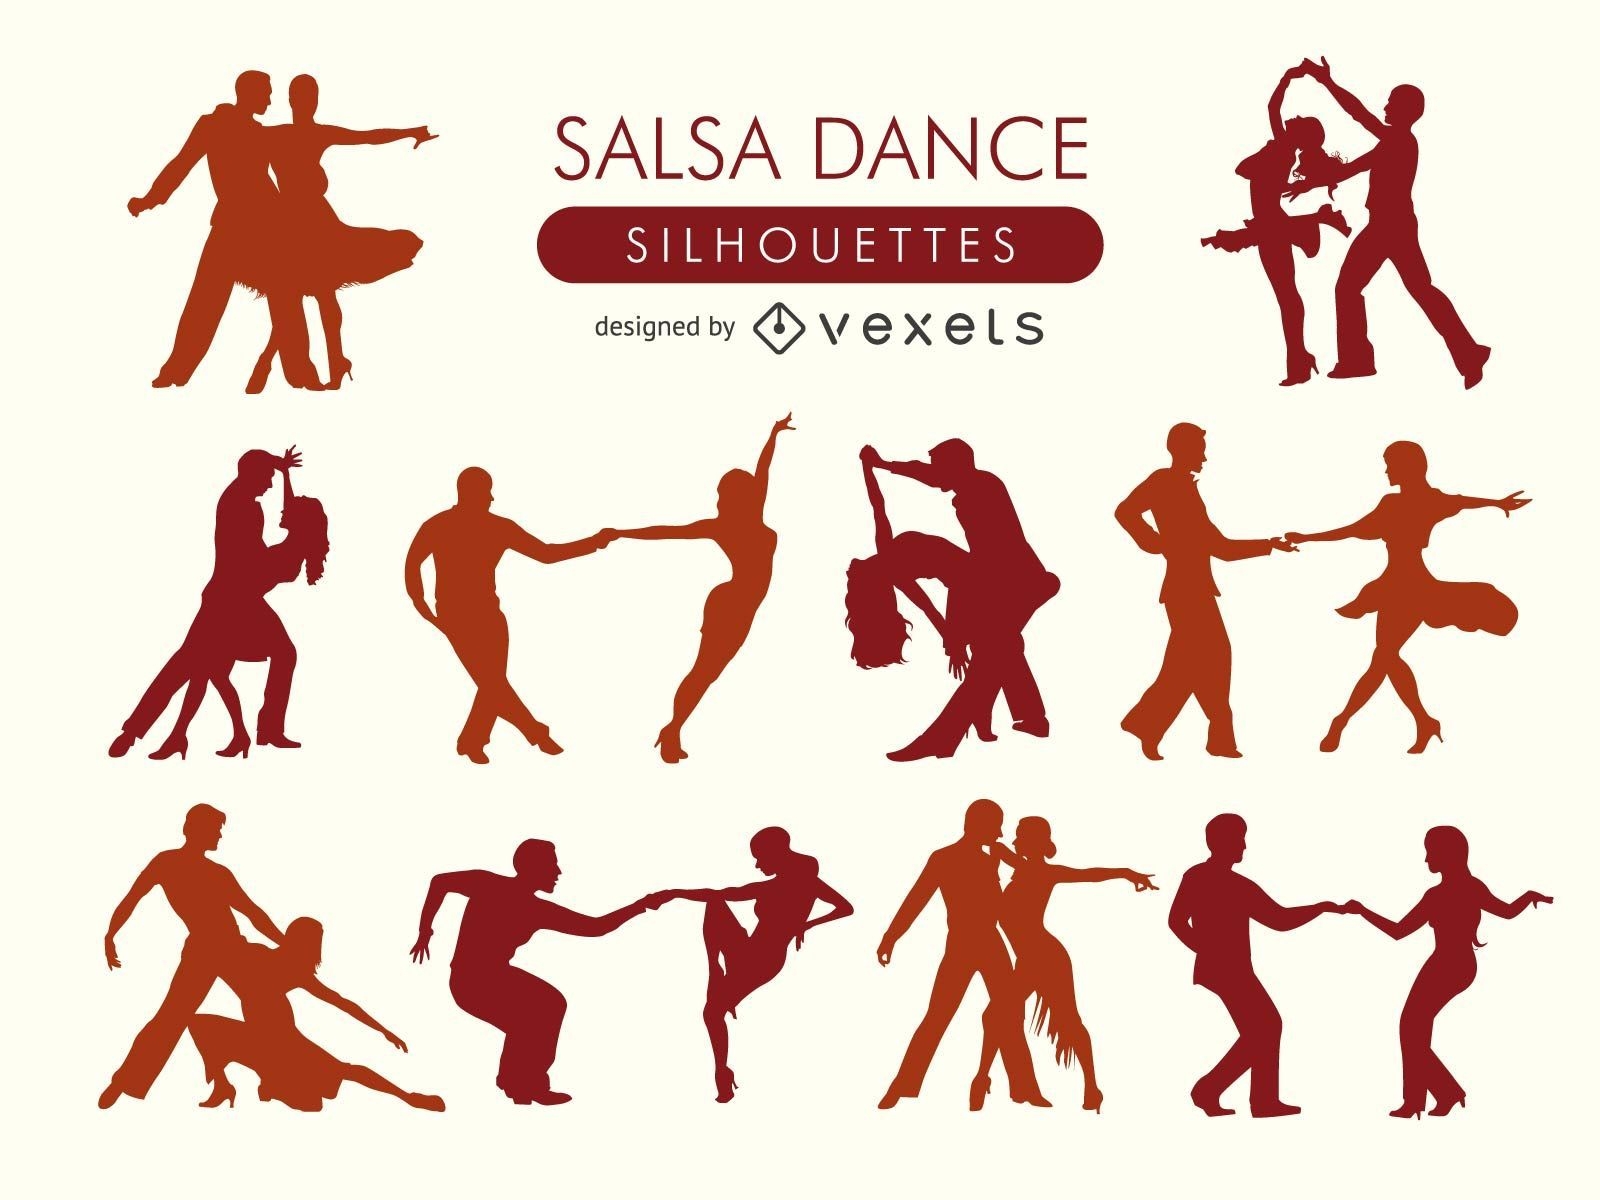 Salsa dancers silhouette set